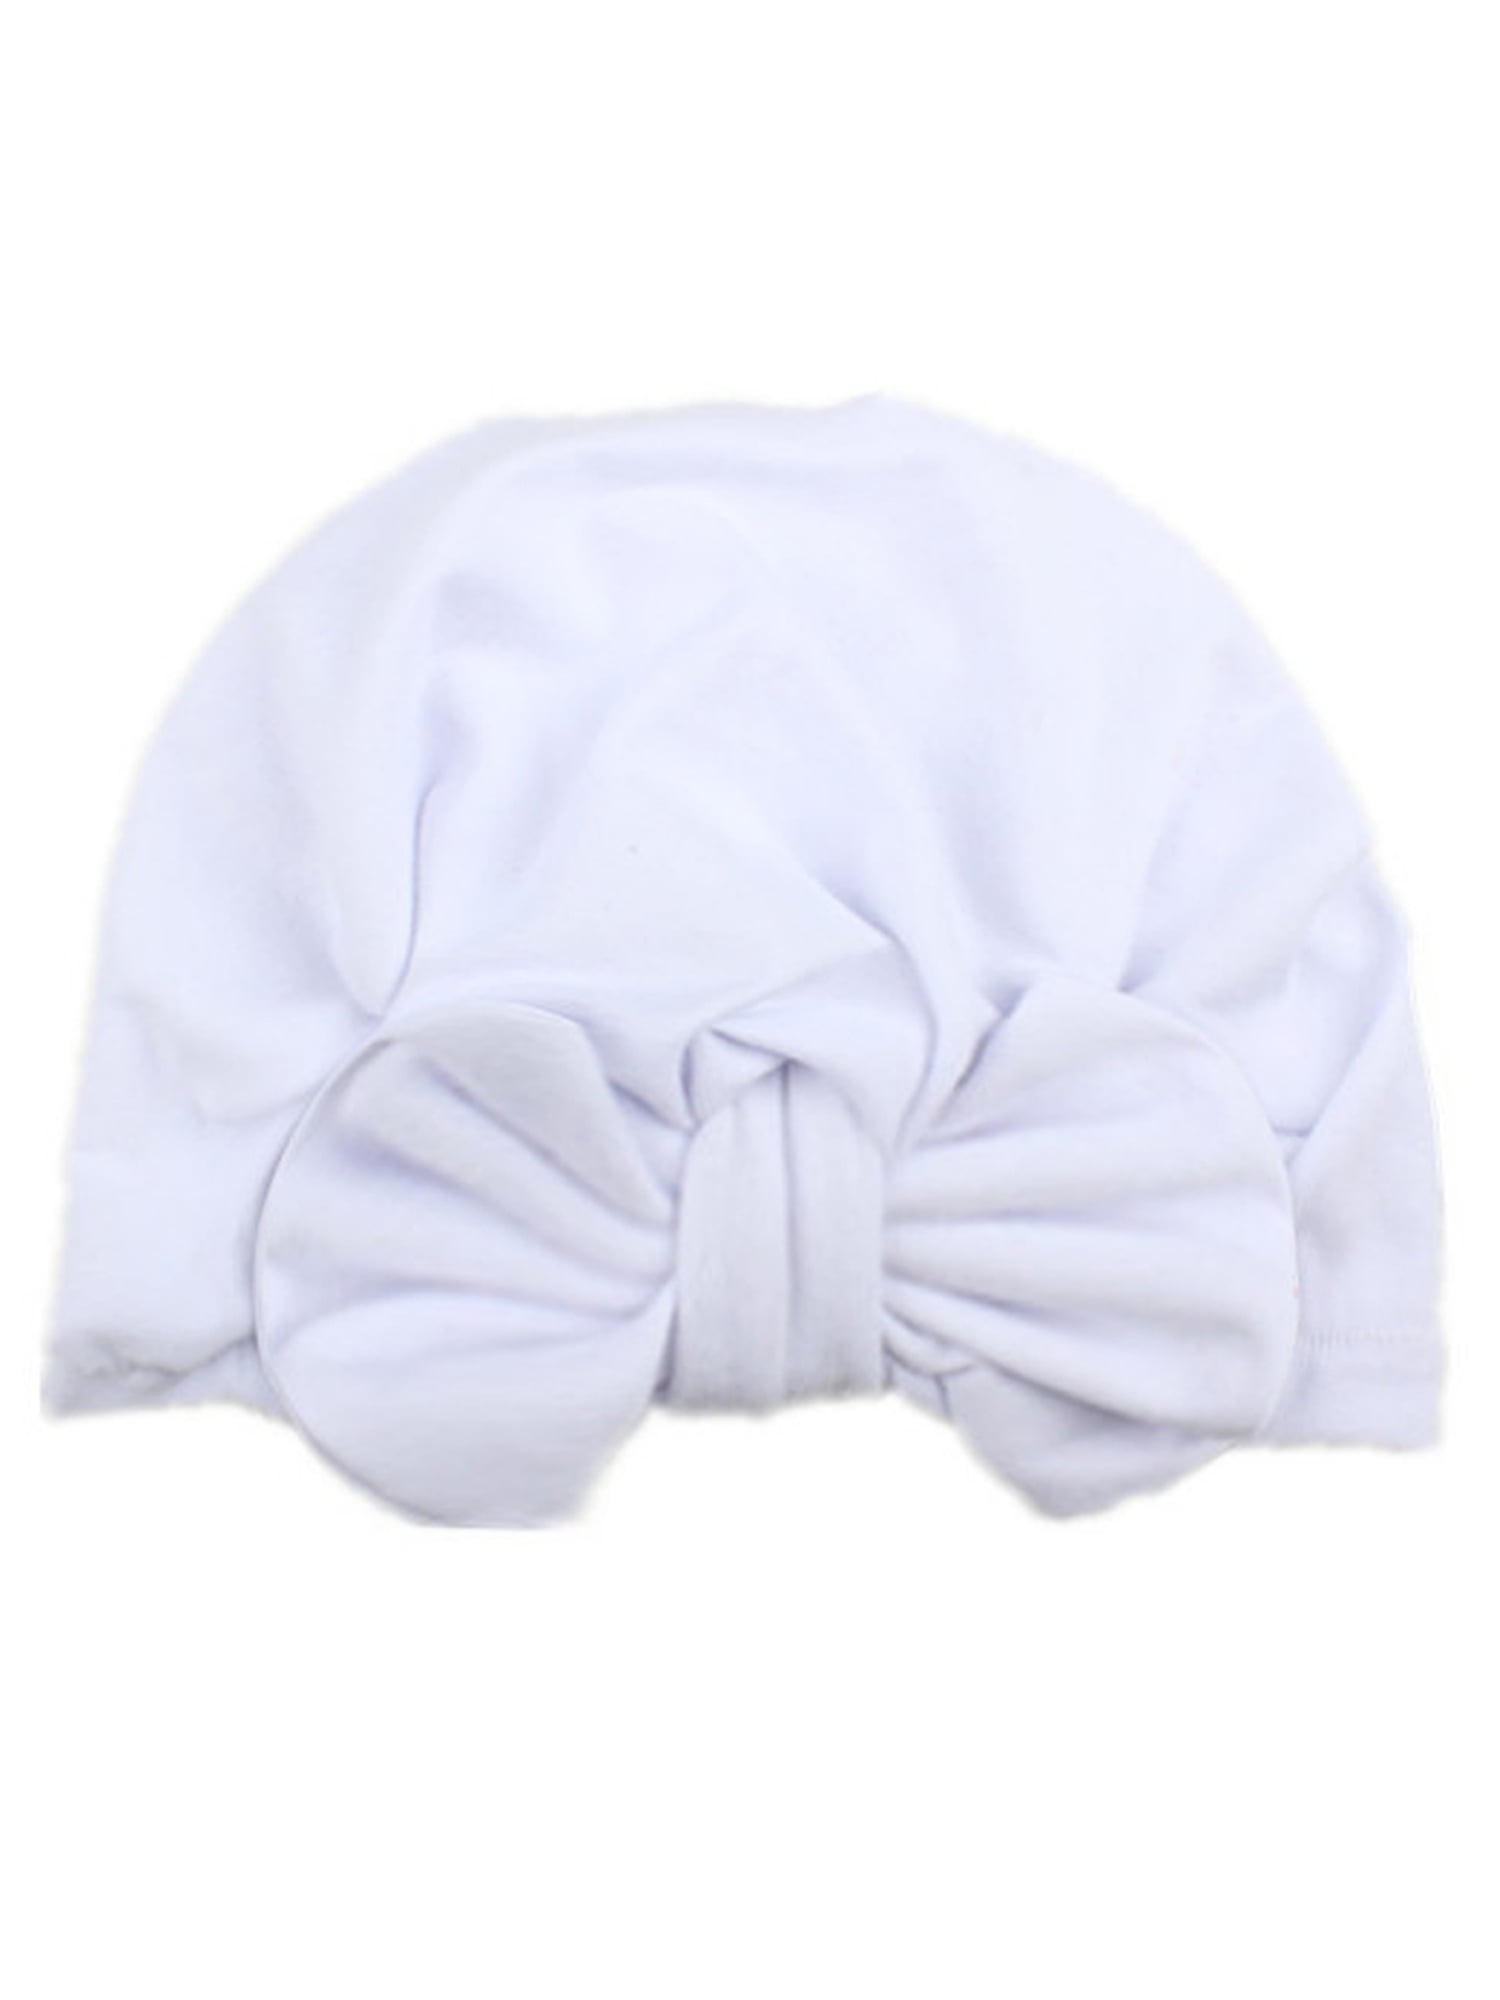 Details about   Newborn Pleated Baby Cotton Turban Knot Headband Headband Hat Head Wrap 